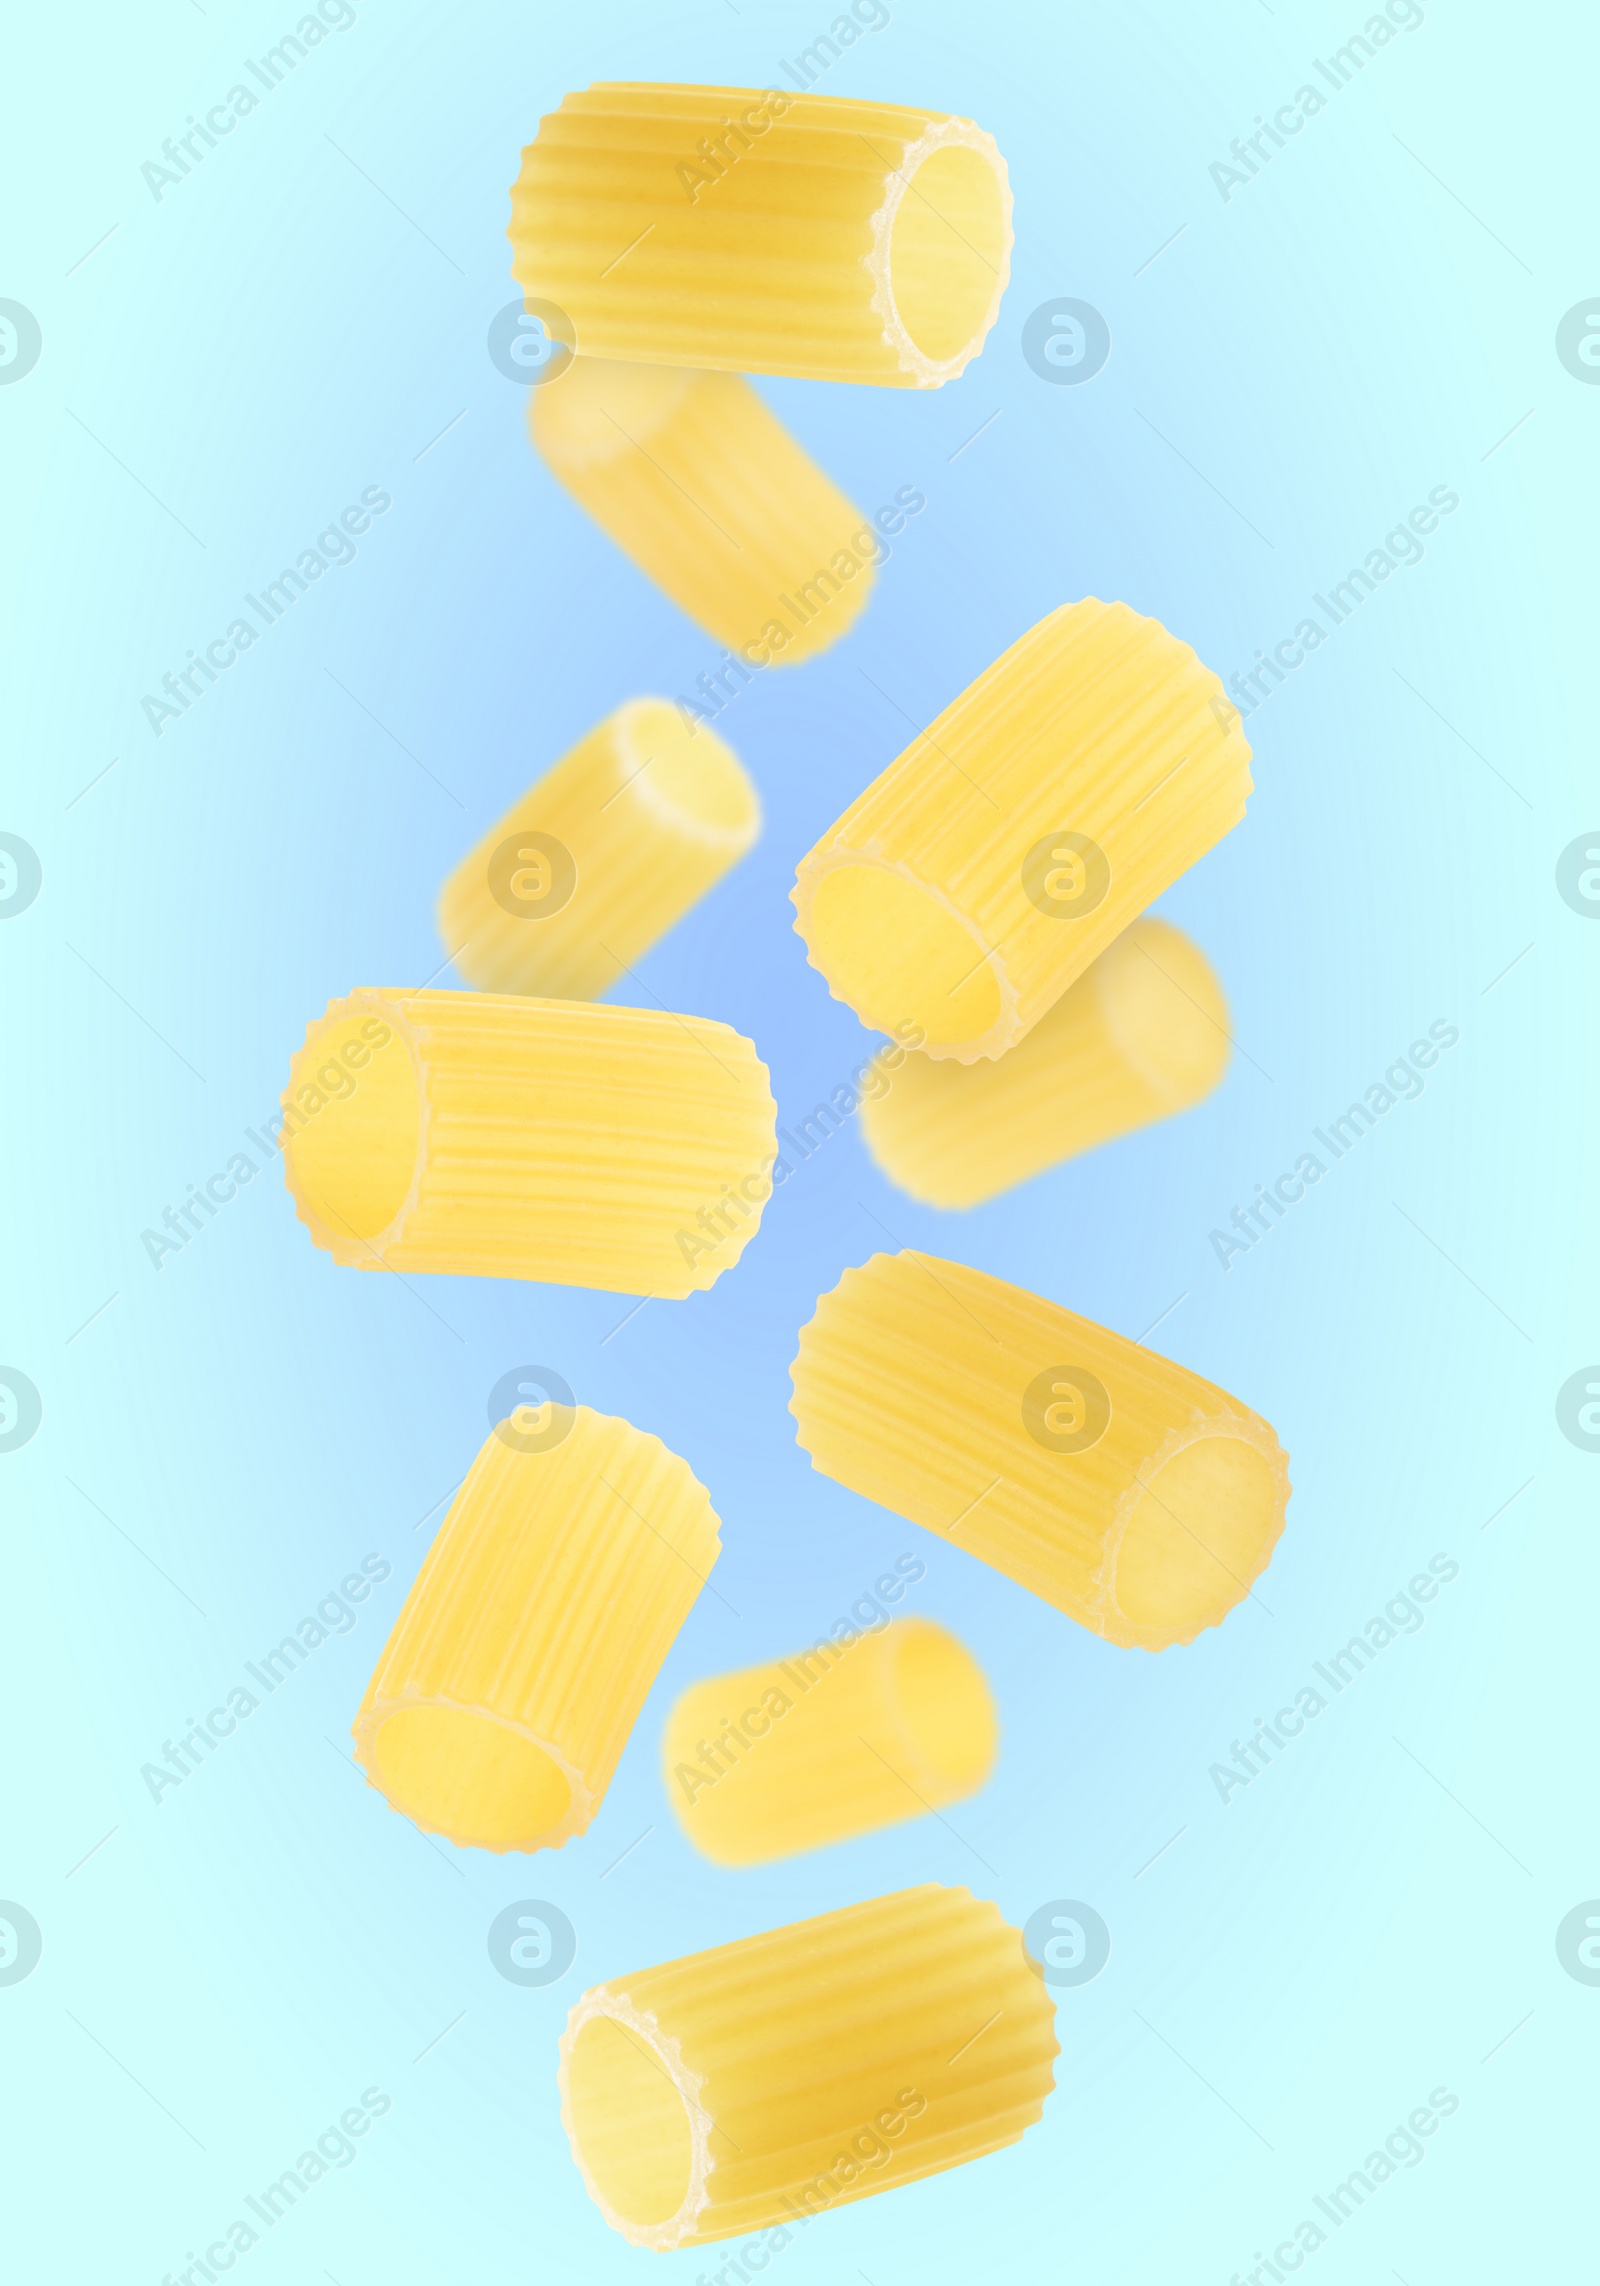 Image of Raw rigatoni pasta falling on light blue background